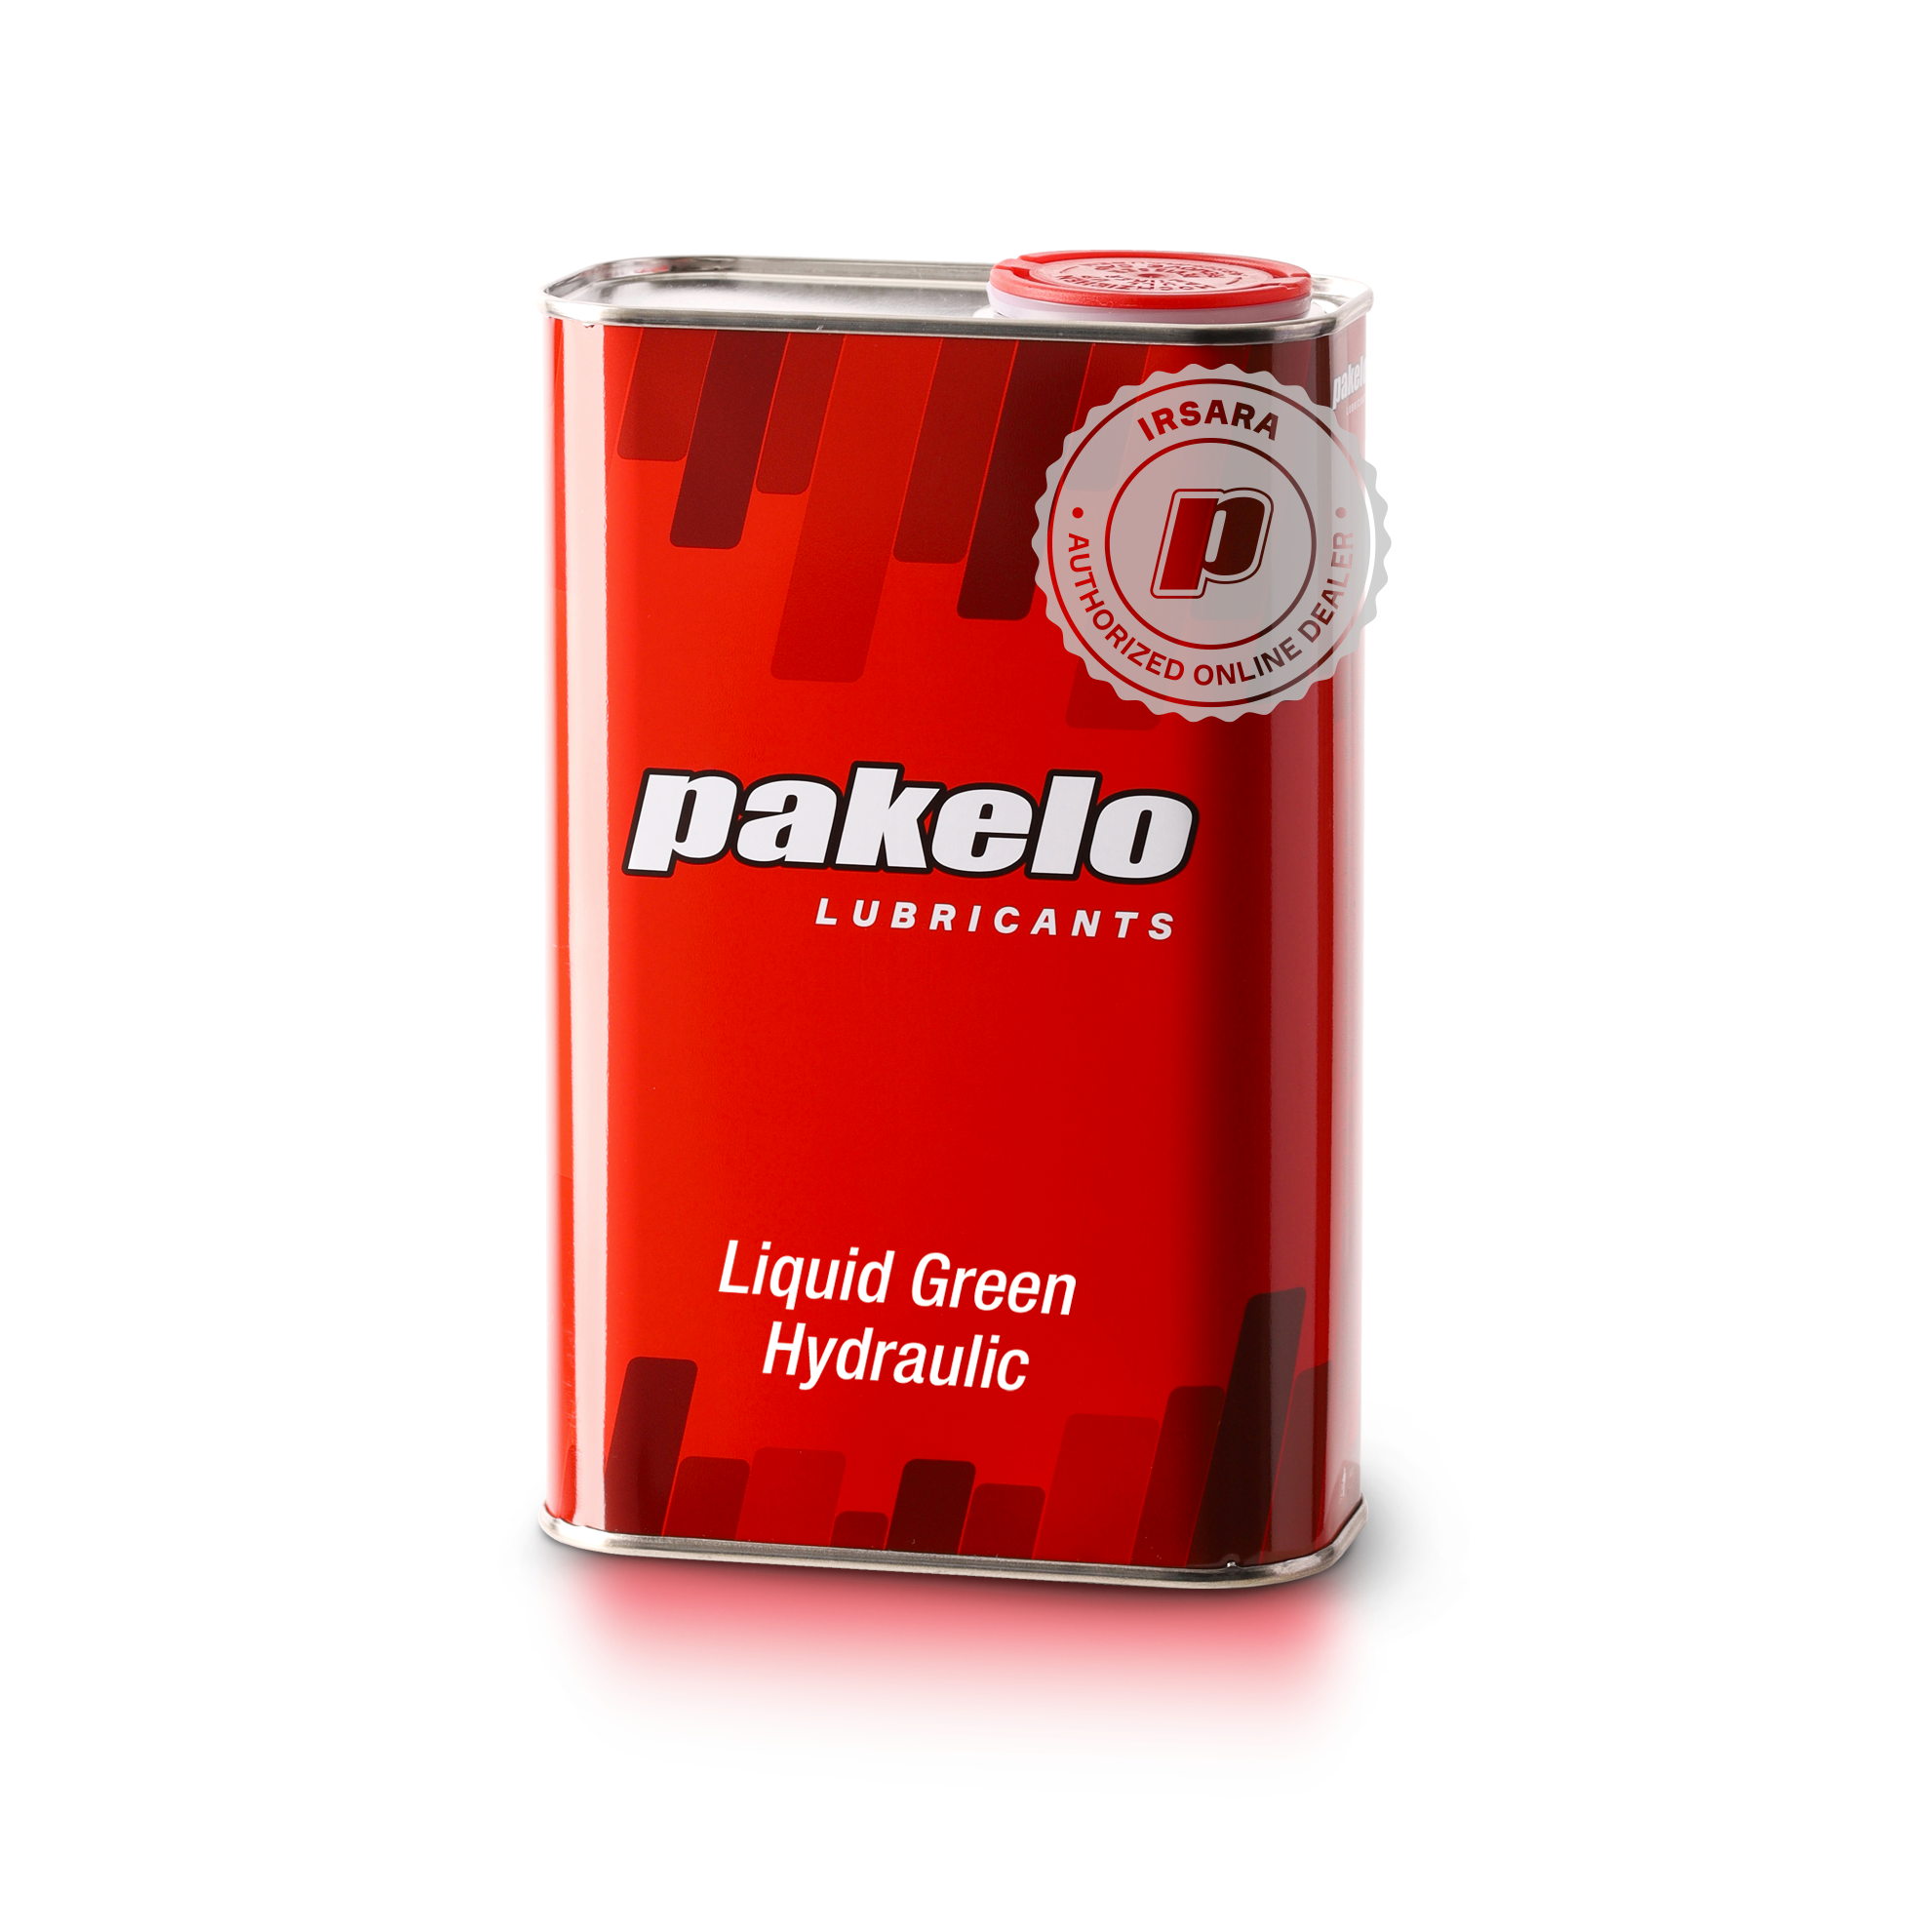 PAKELO LIQUID GREEN HYDRAULIC (1 L)